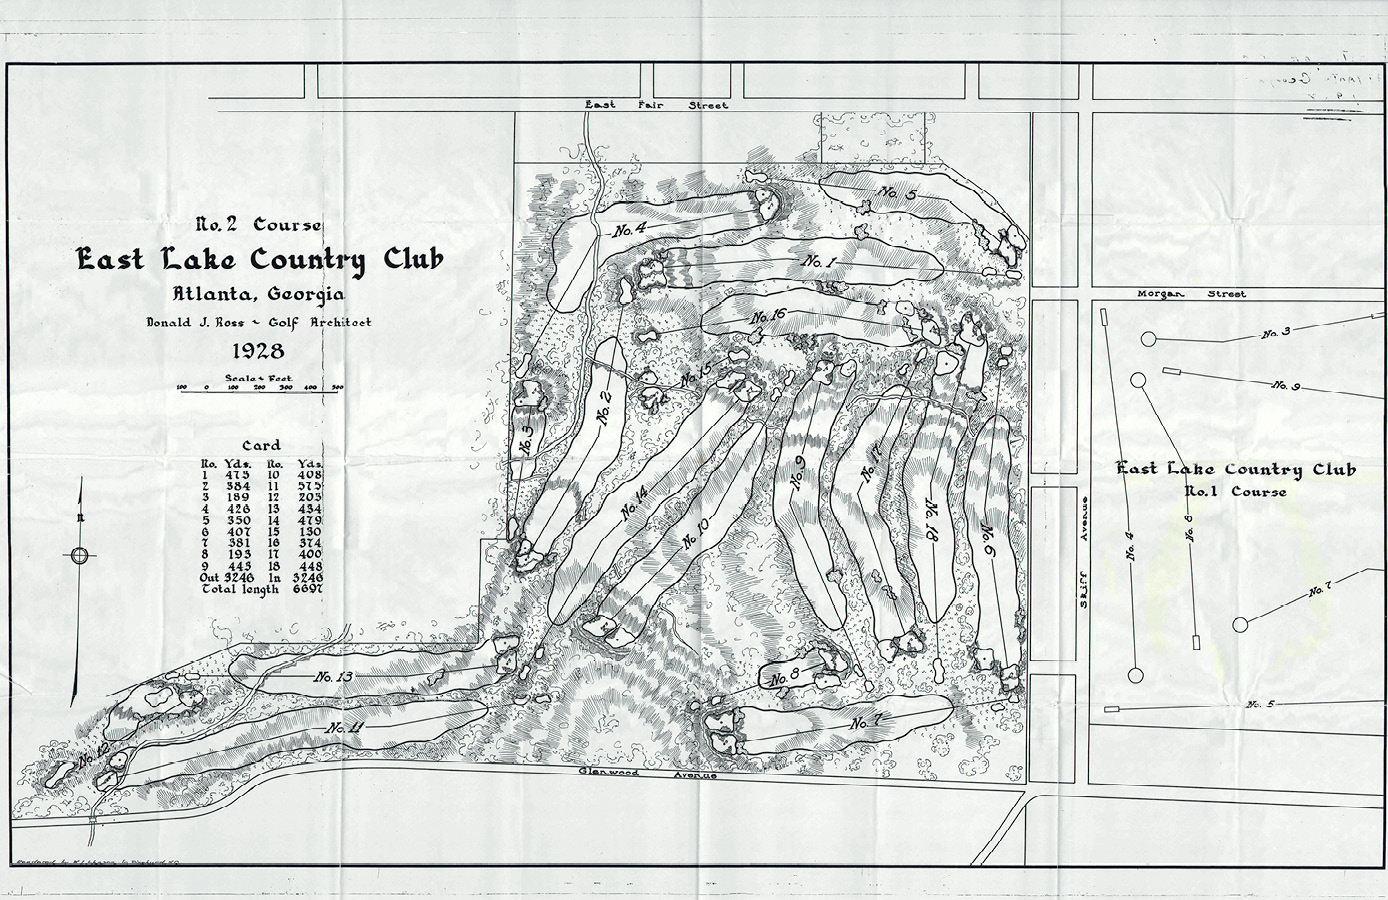 Donald Ross' design of the original No. 2 Course at East Lake.